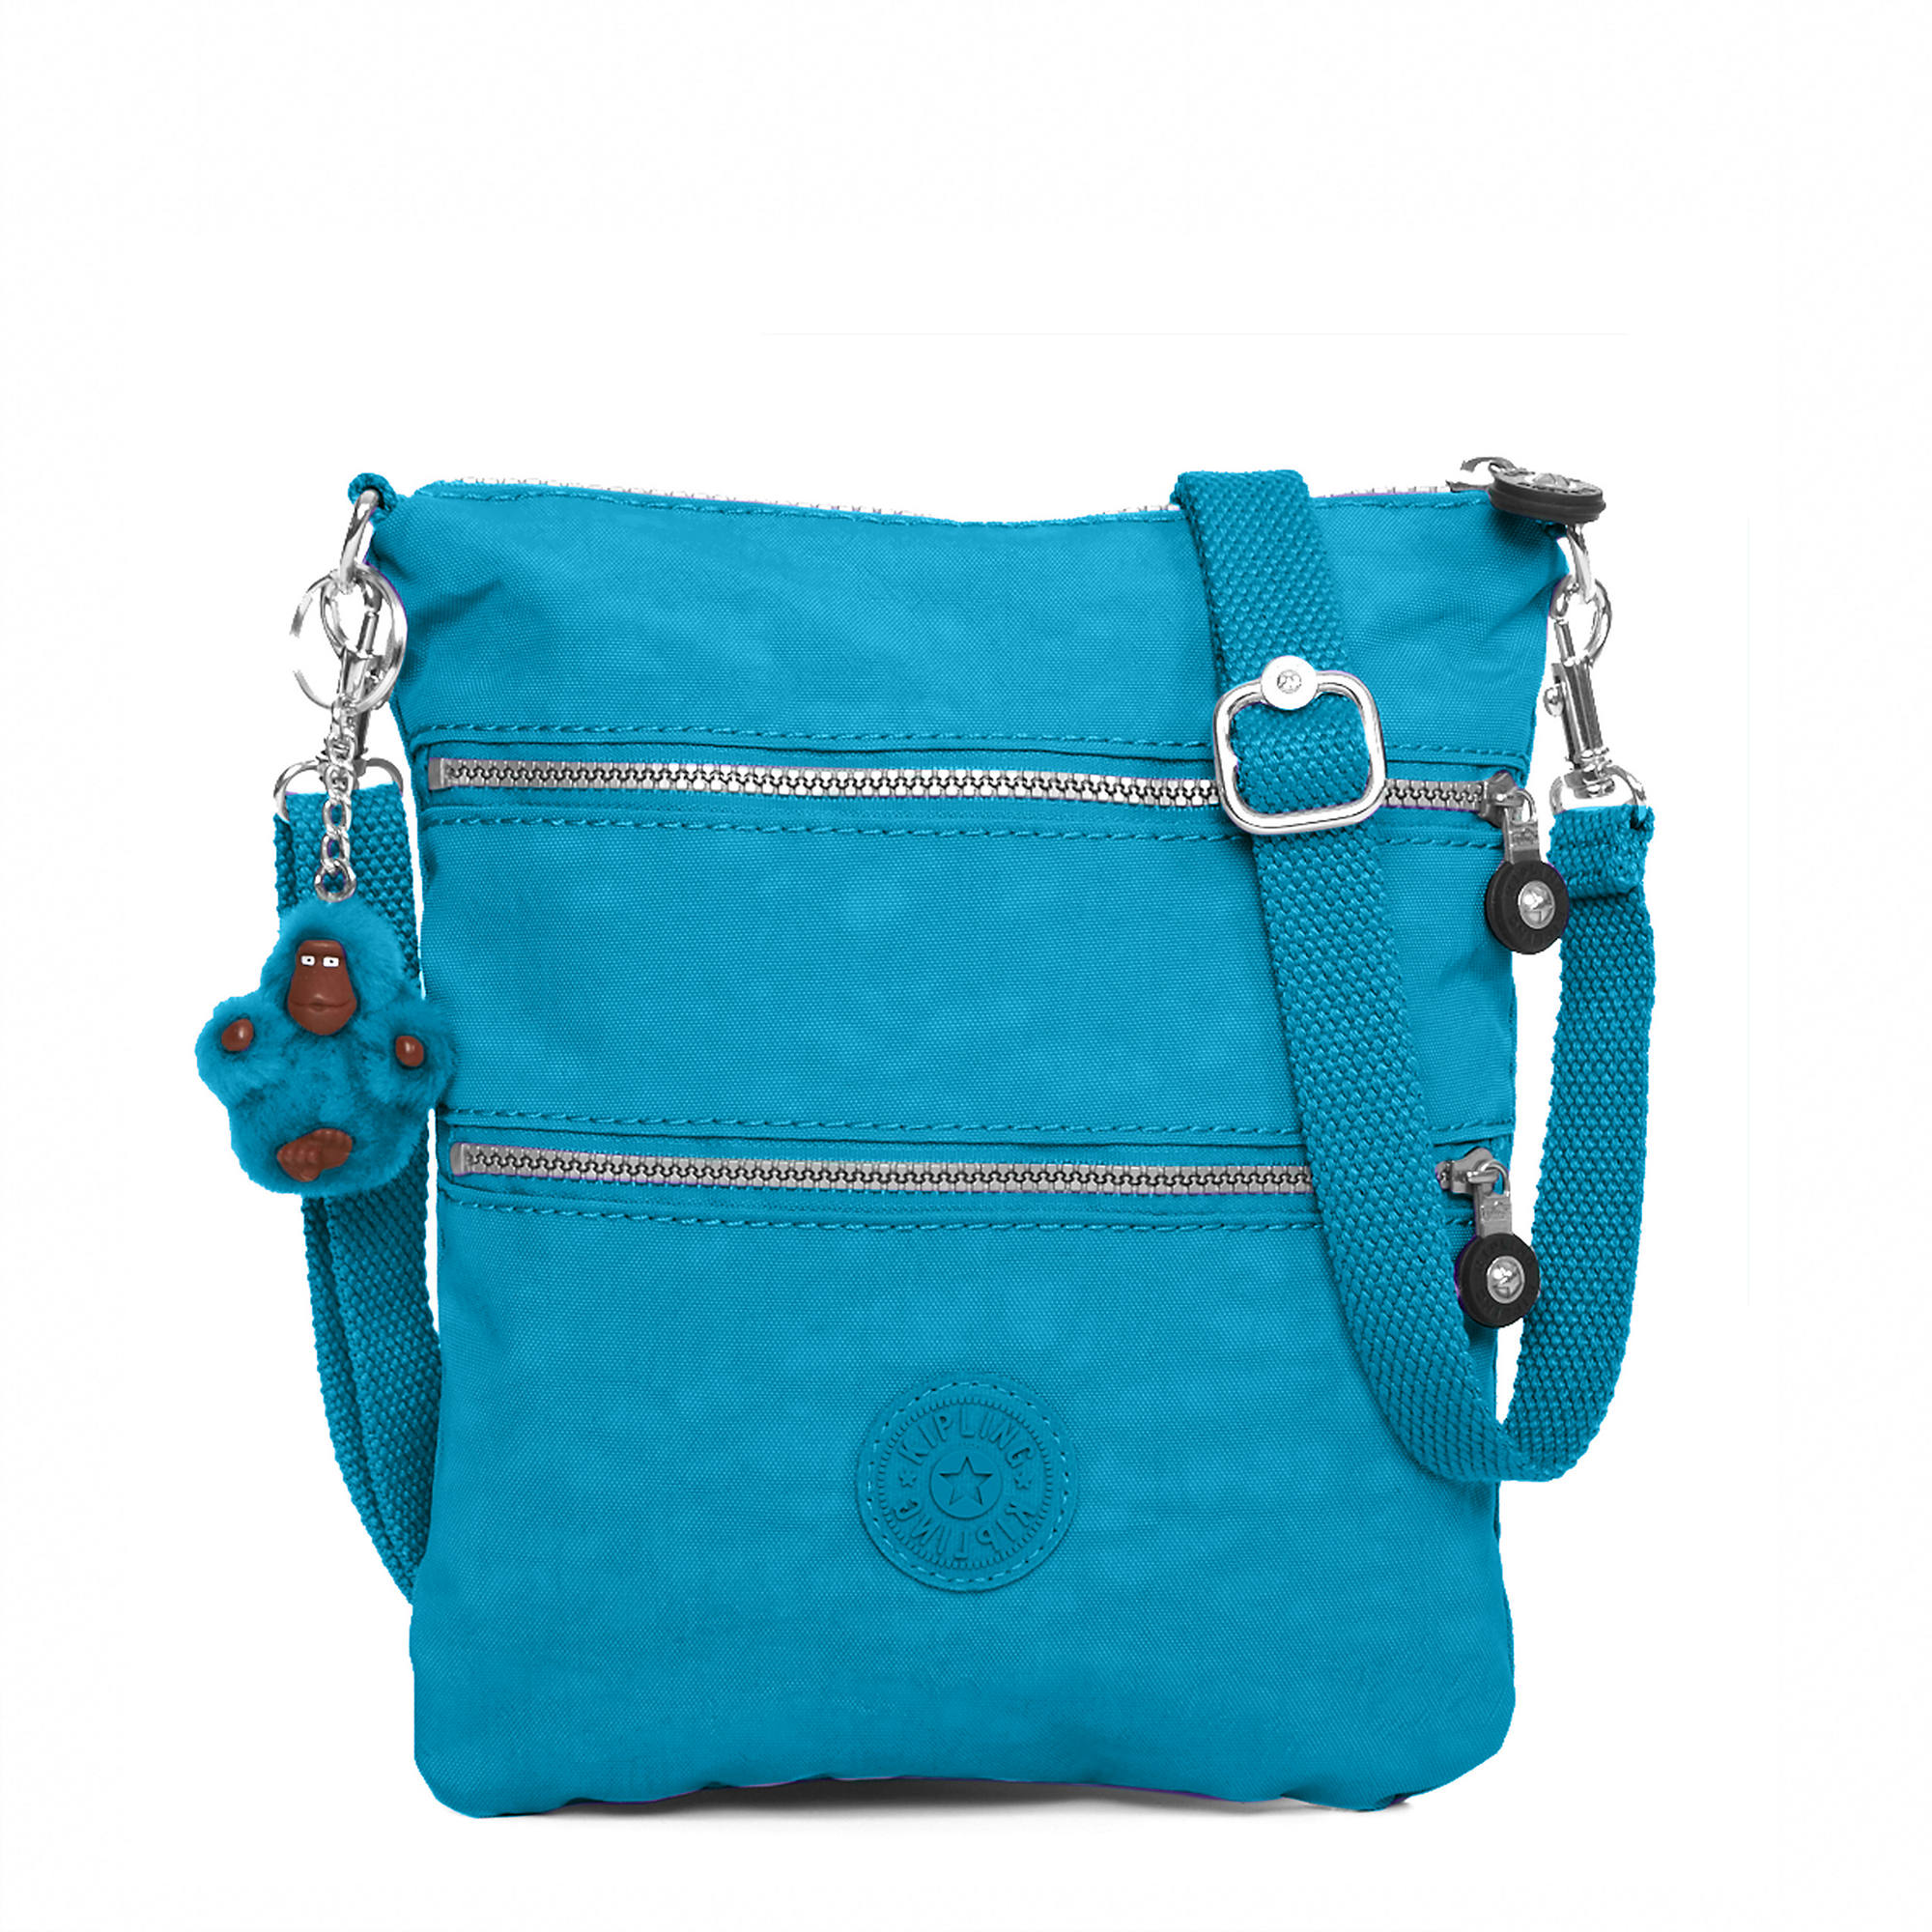 Kipling Rizzi Metallic Convertible Mini Bag | eBay